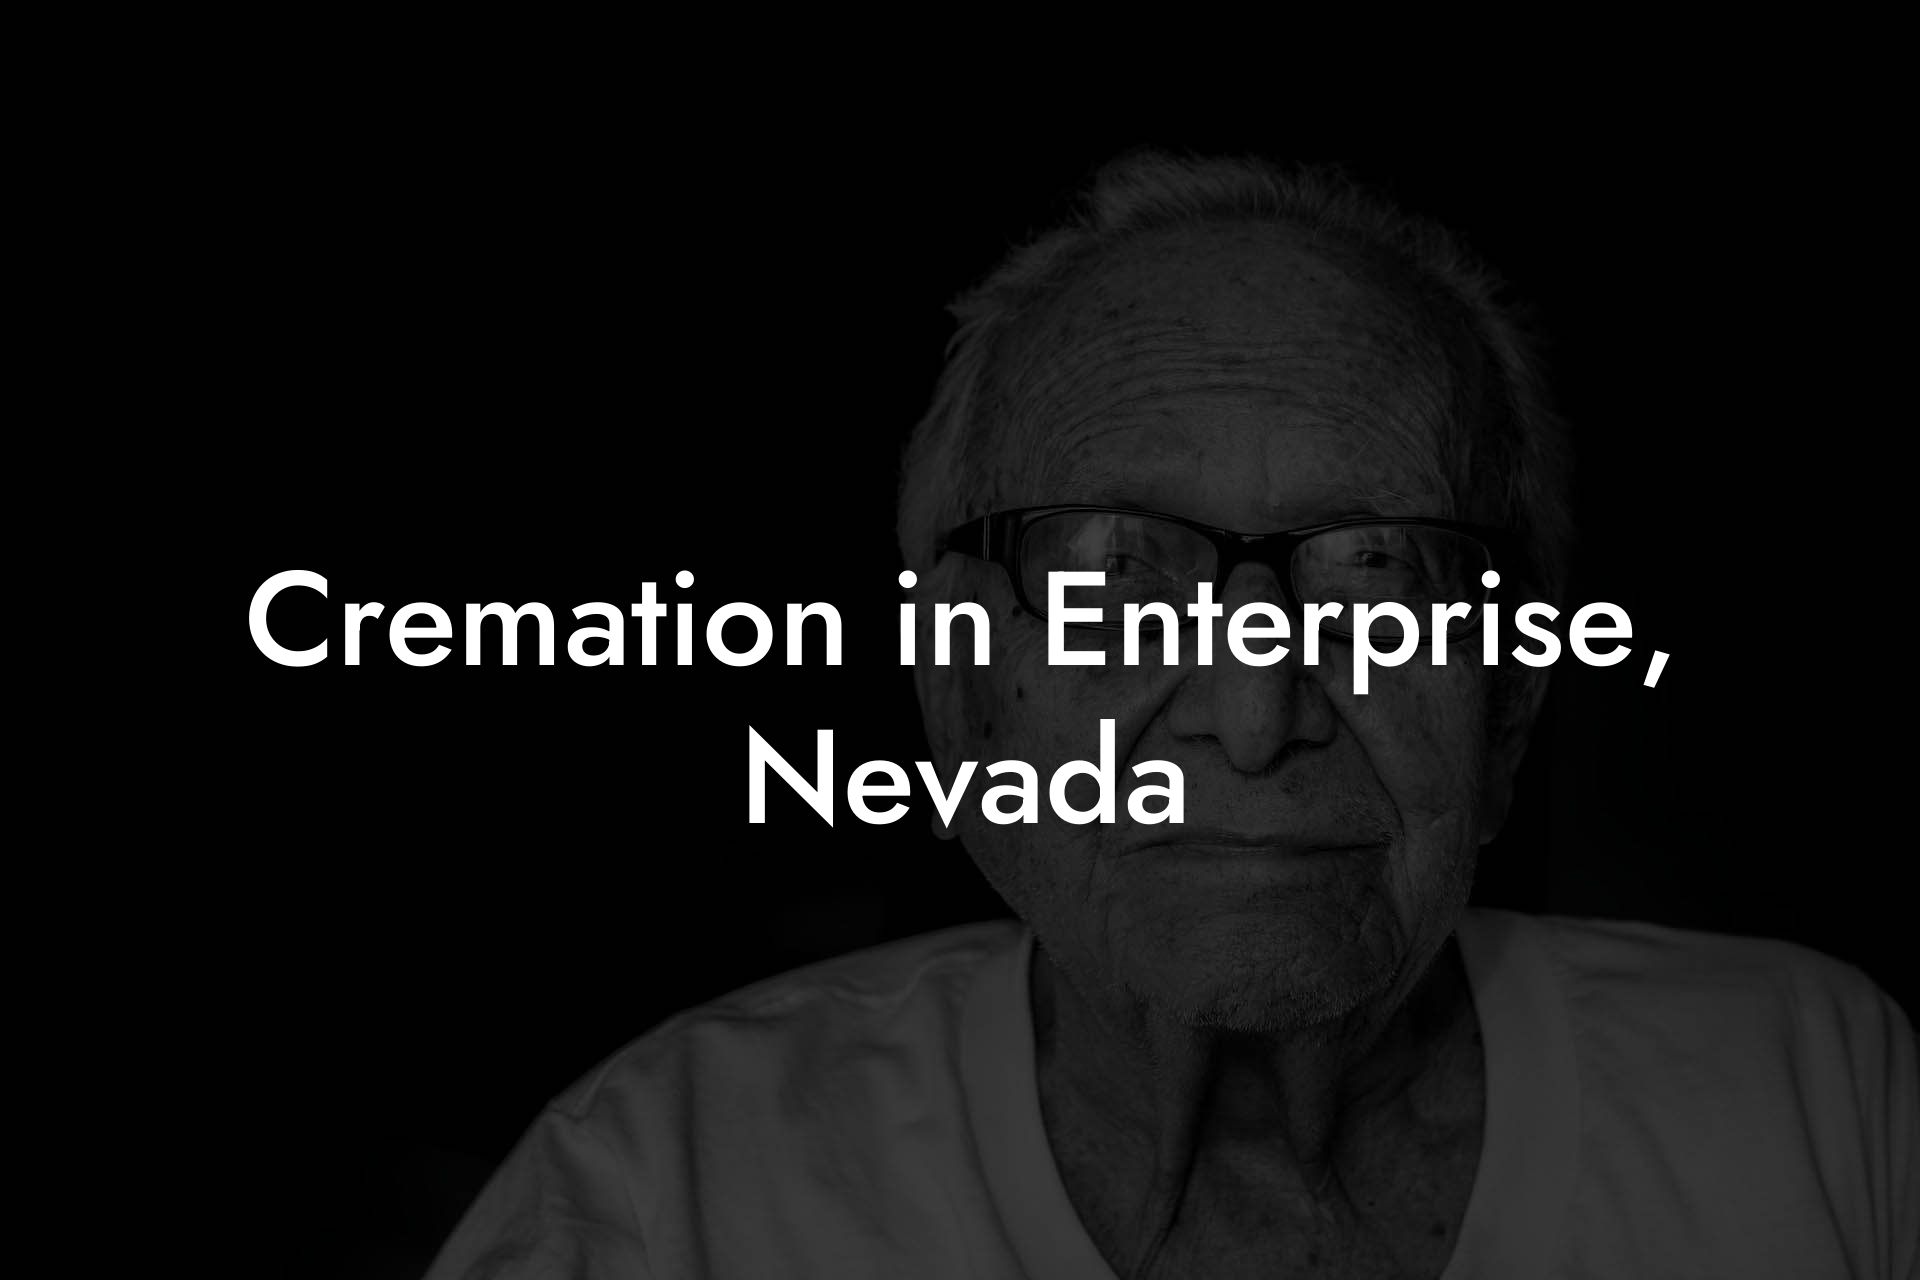 Cremation in Enterprise, Nevada